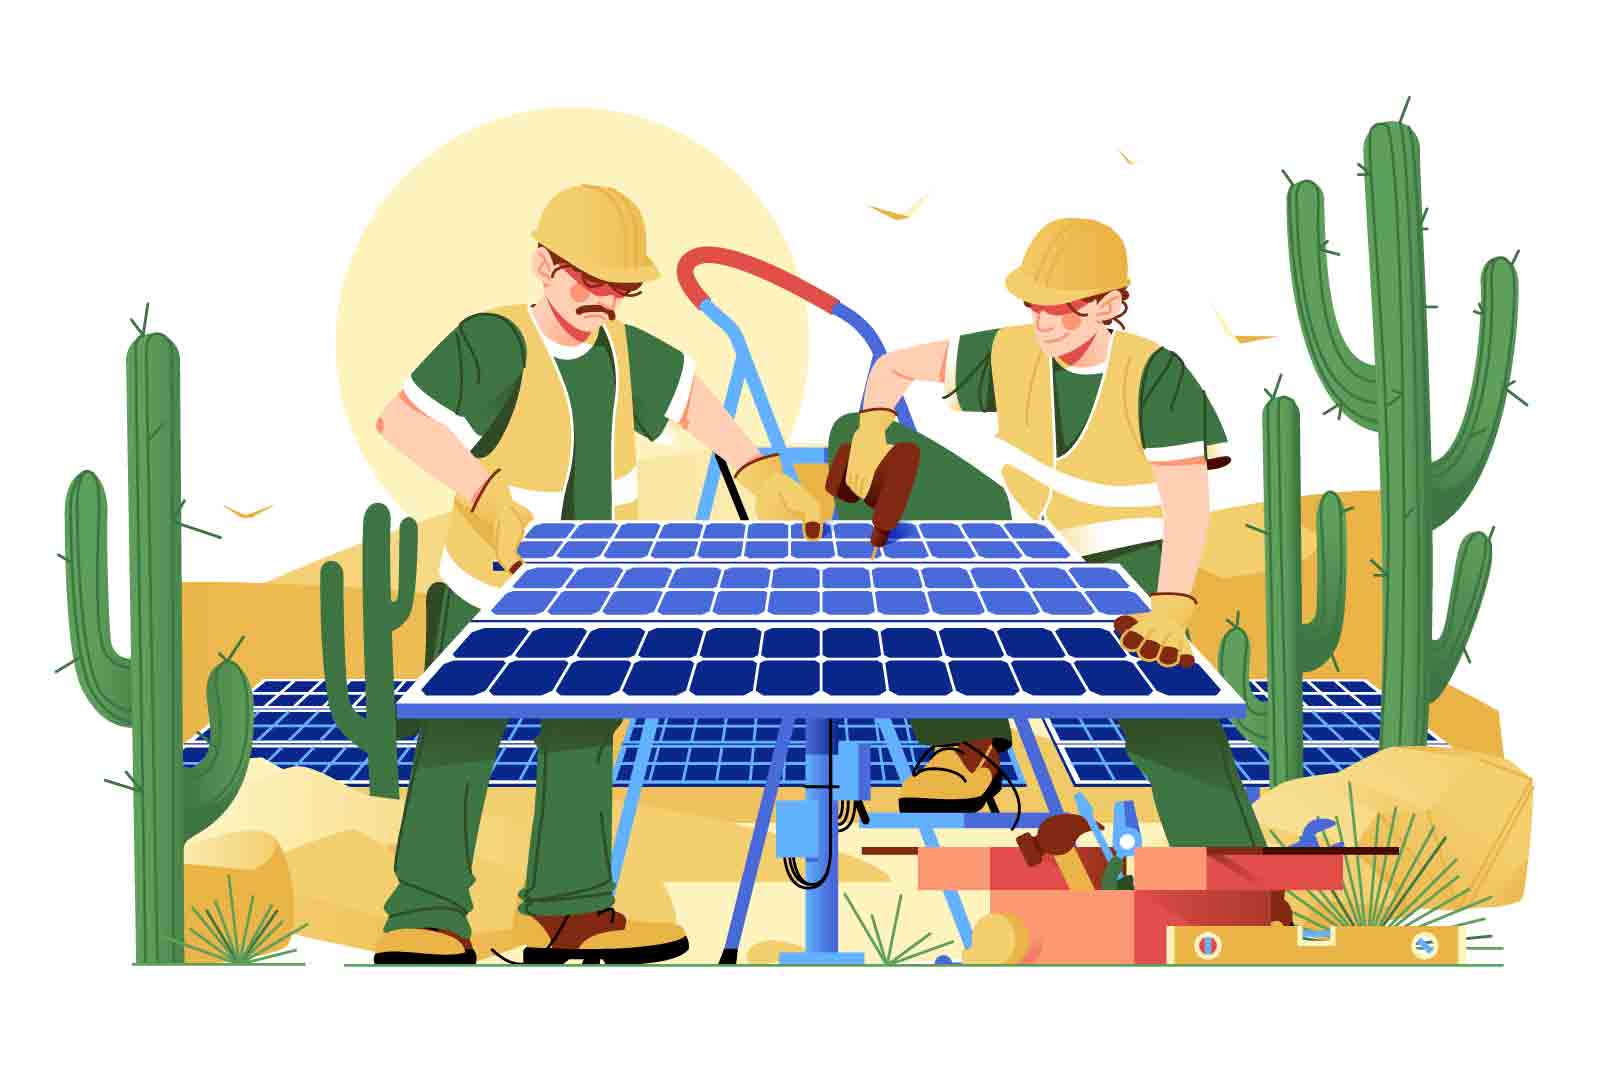 Workers install solar panel in desert, vector illustration. Solar energy generation concept.